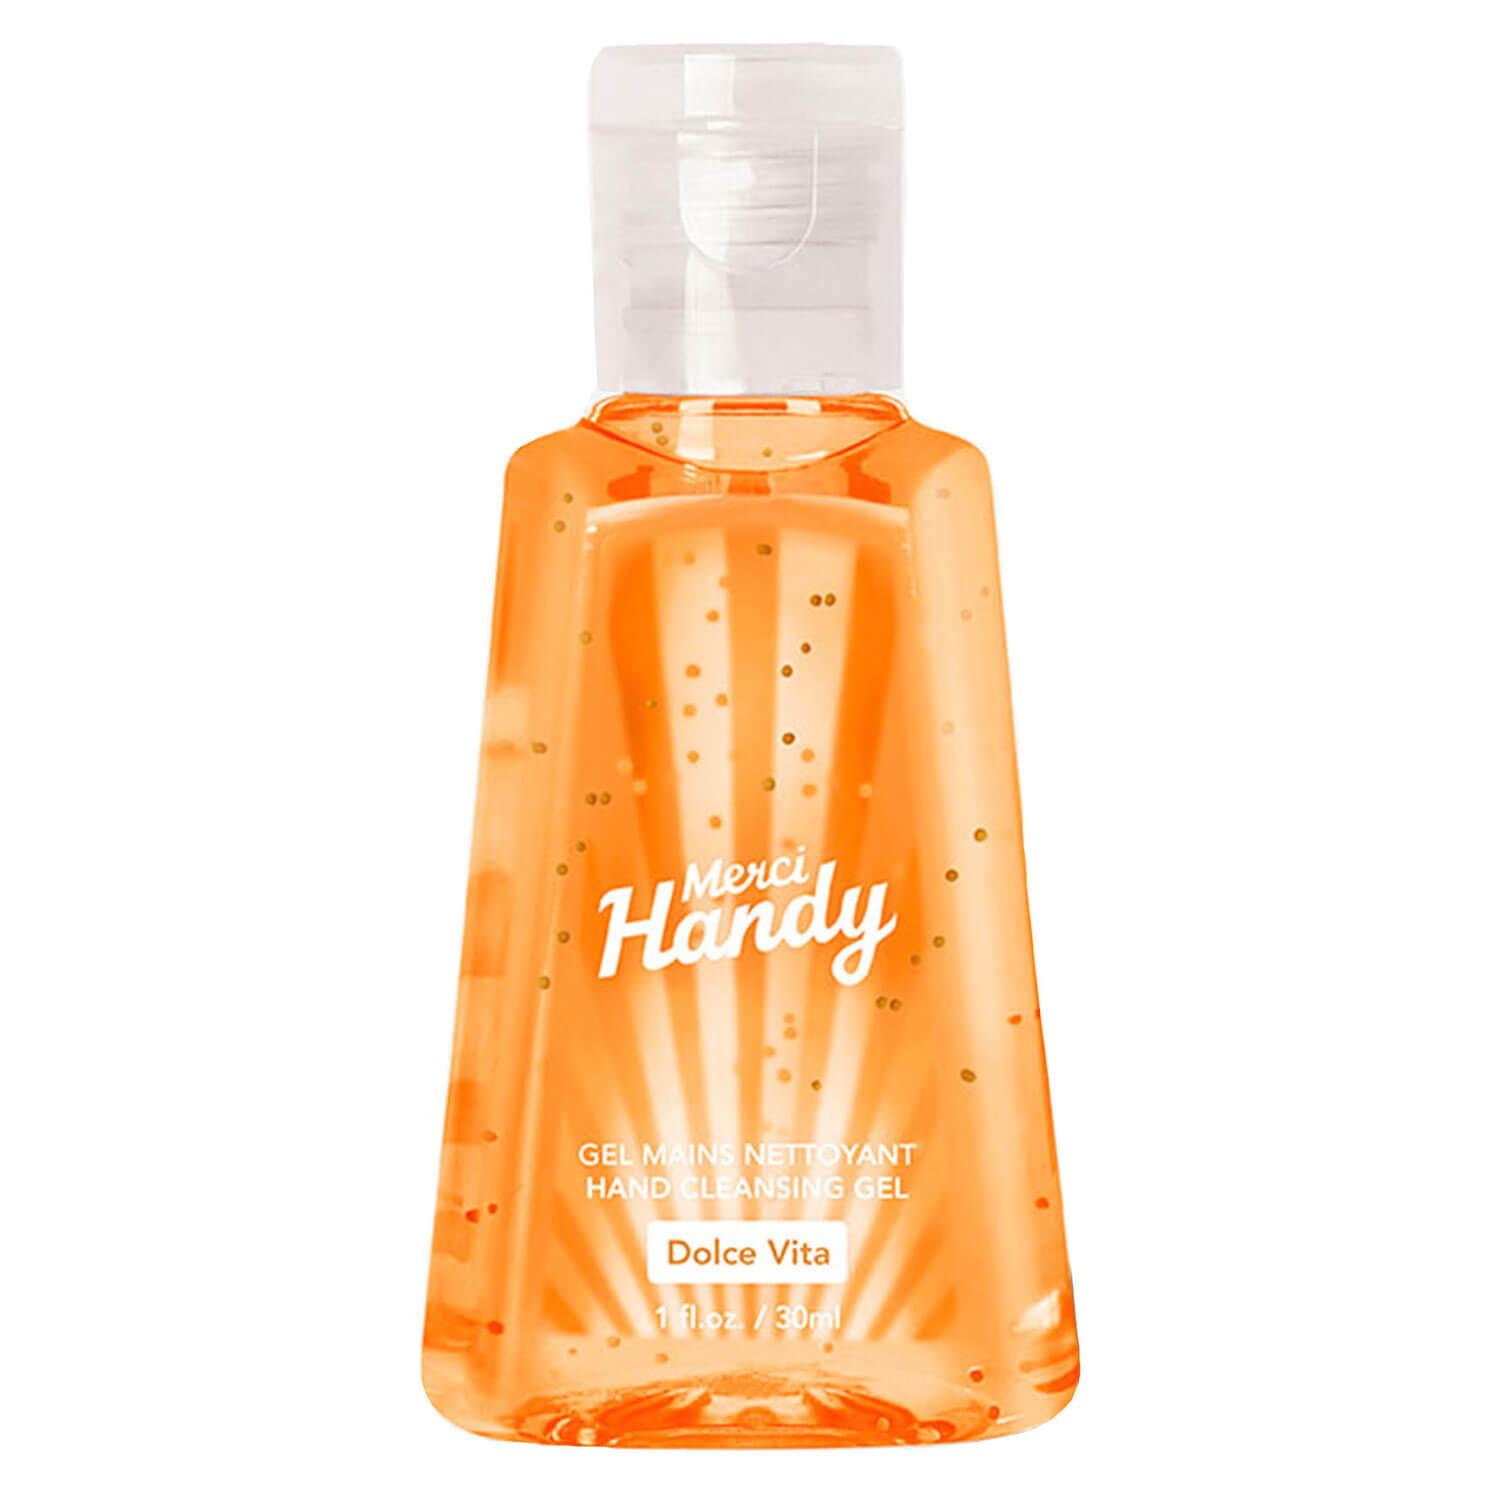 Merci Handy - Hand Cleansing Gel Dolce Vita